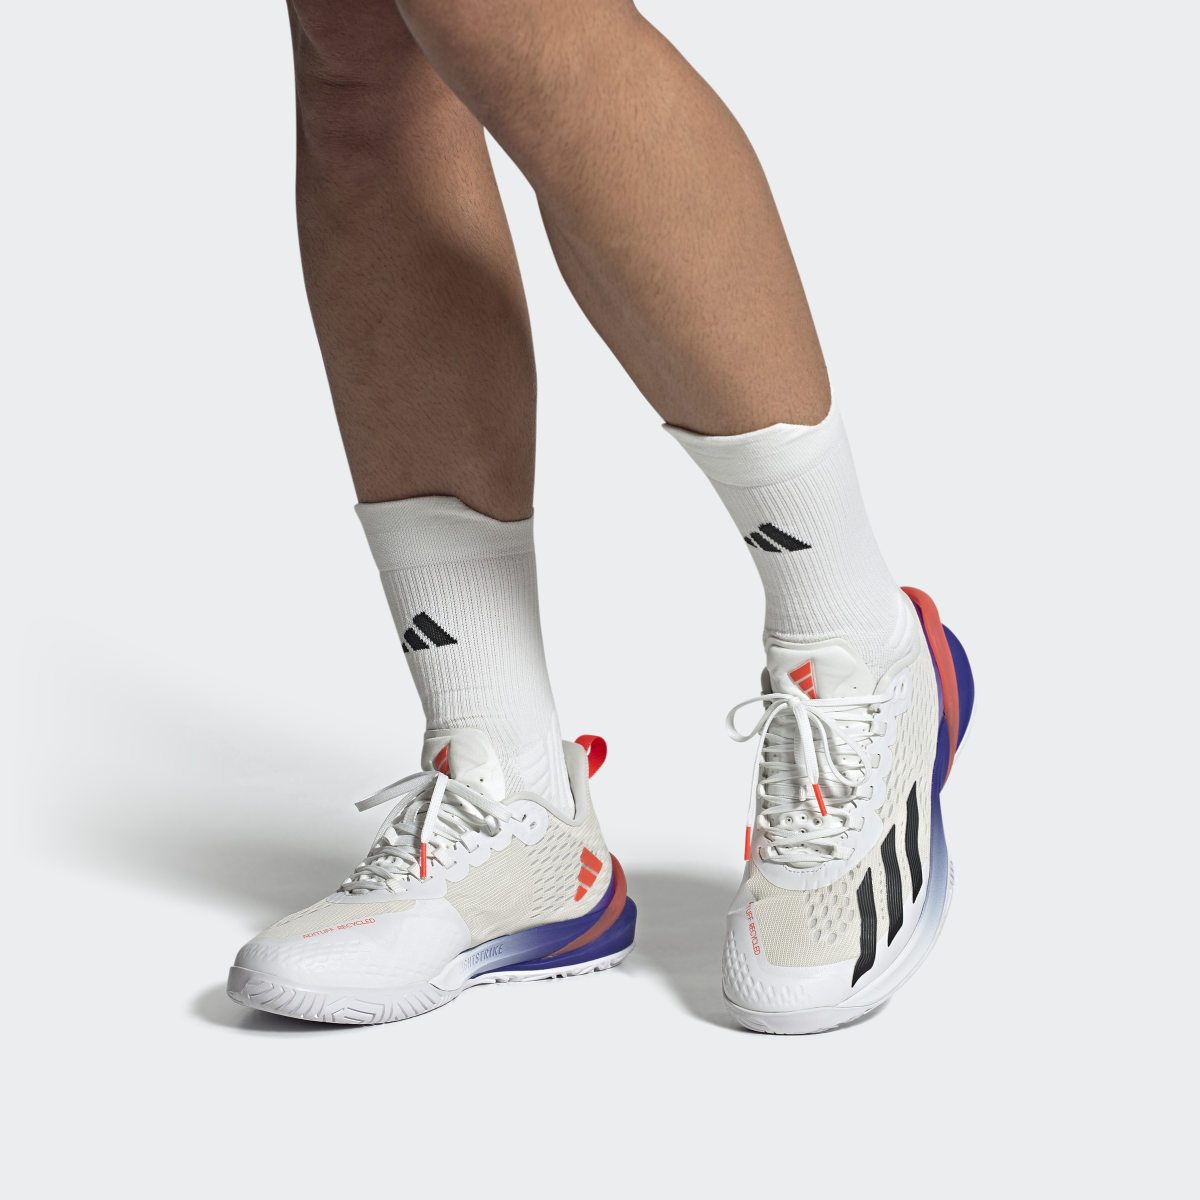 Adidas adizero Cybersonic Tenis Ayakkabısı. 9